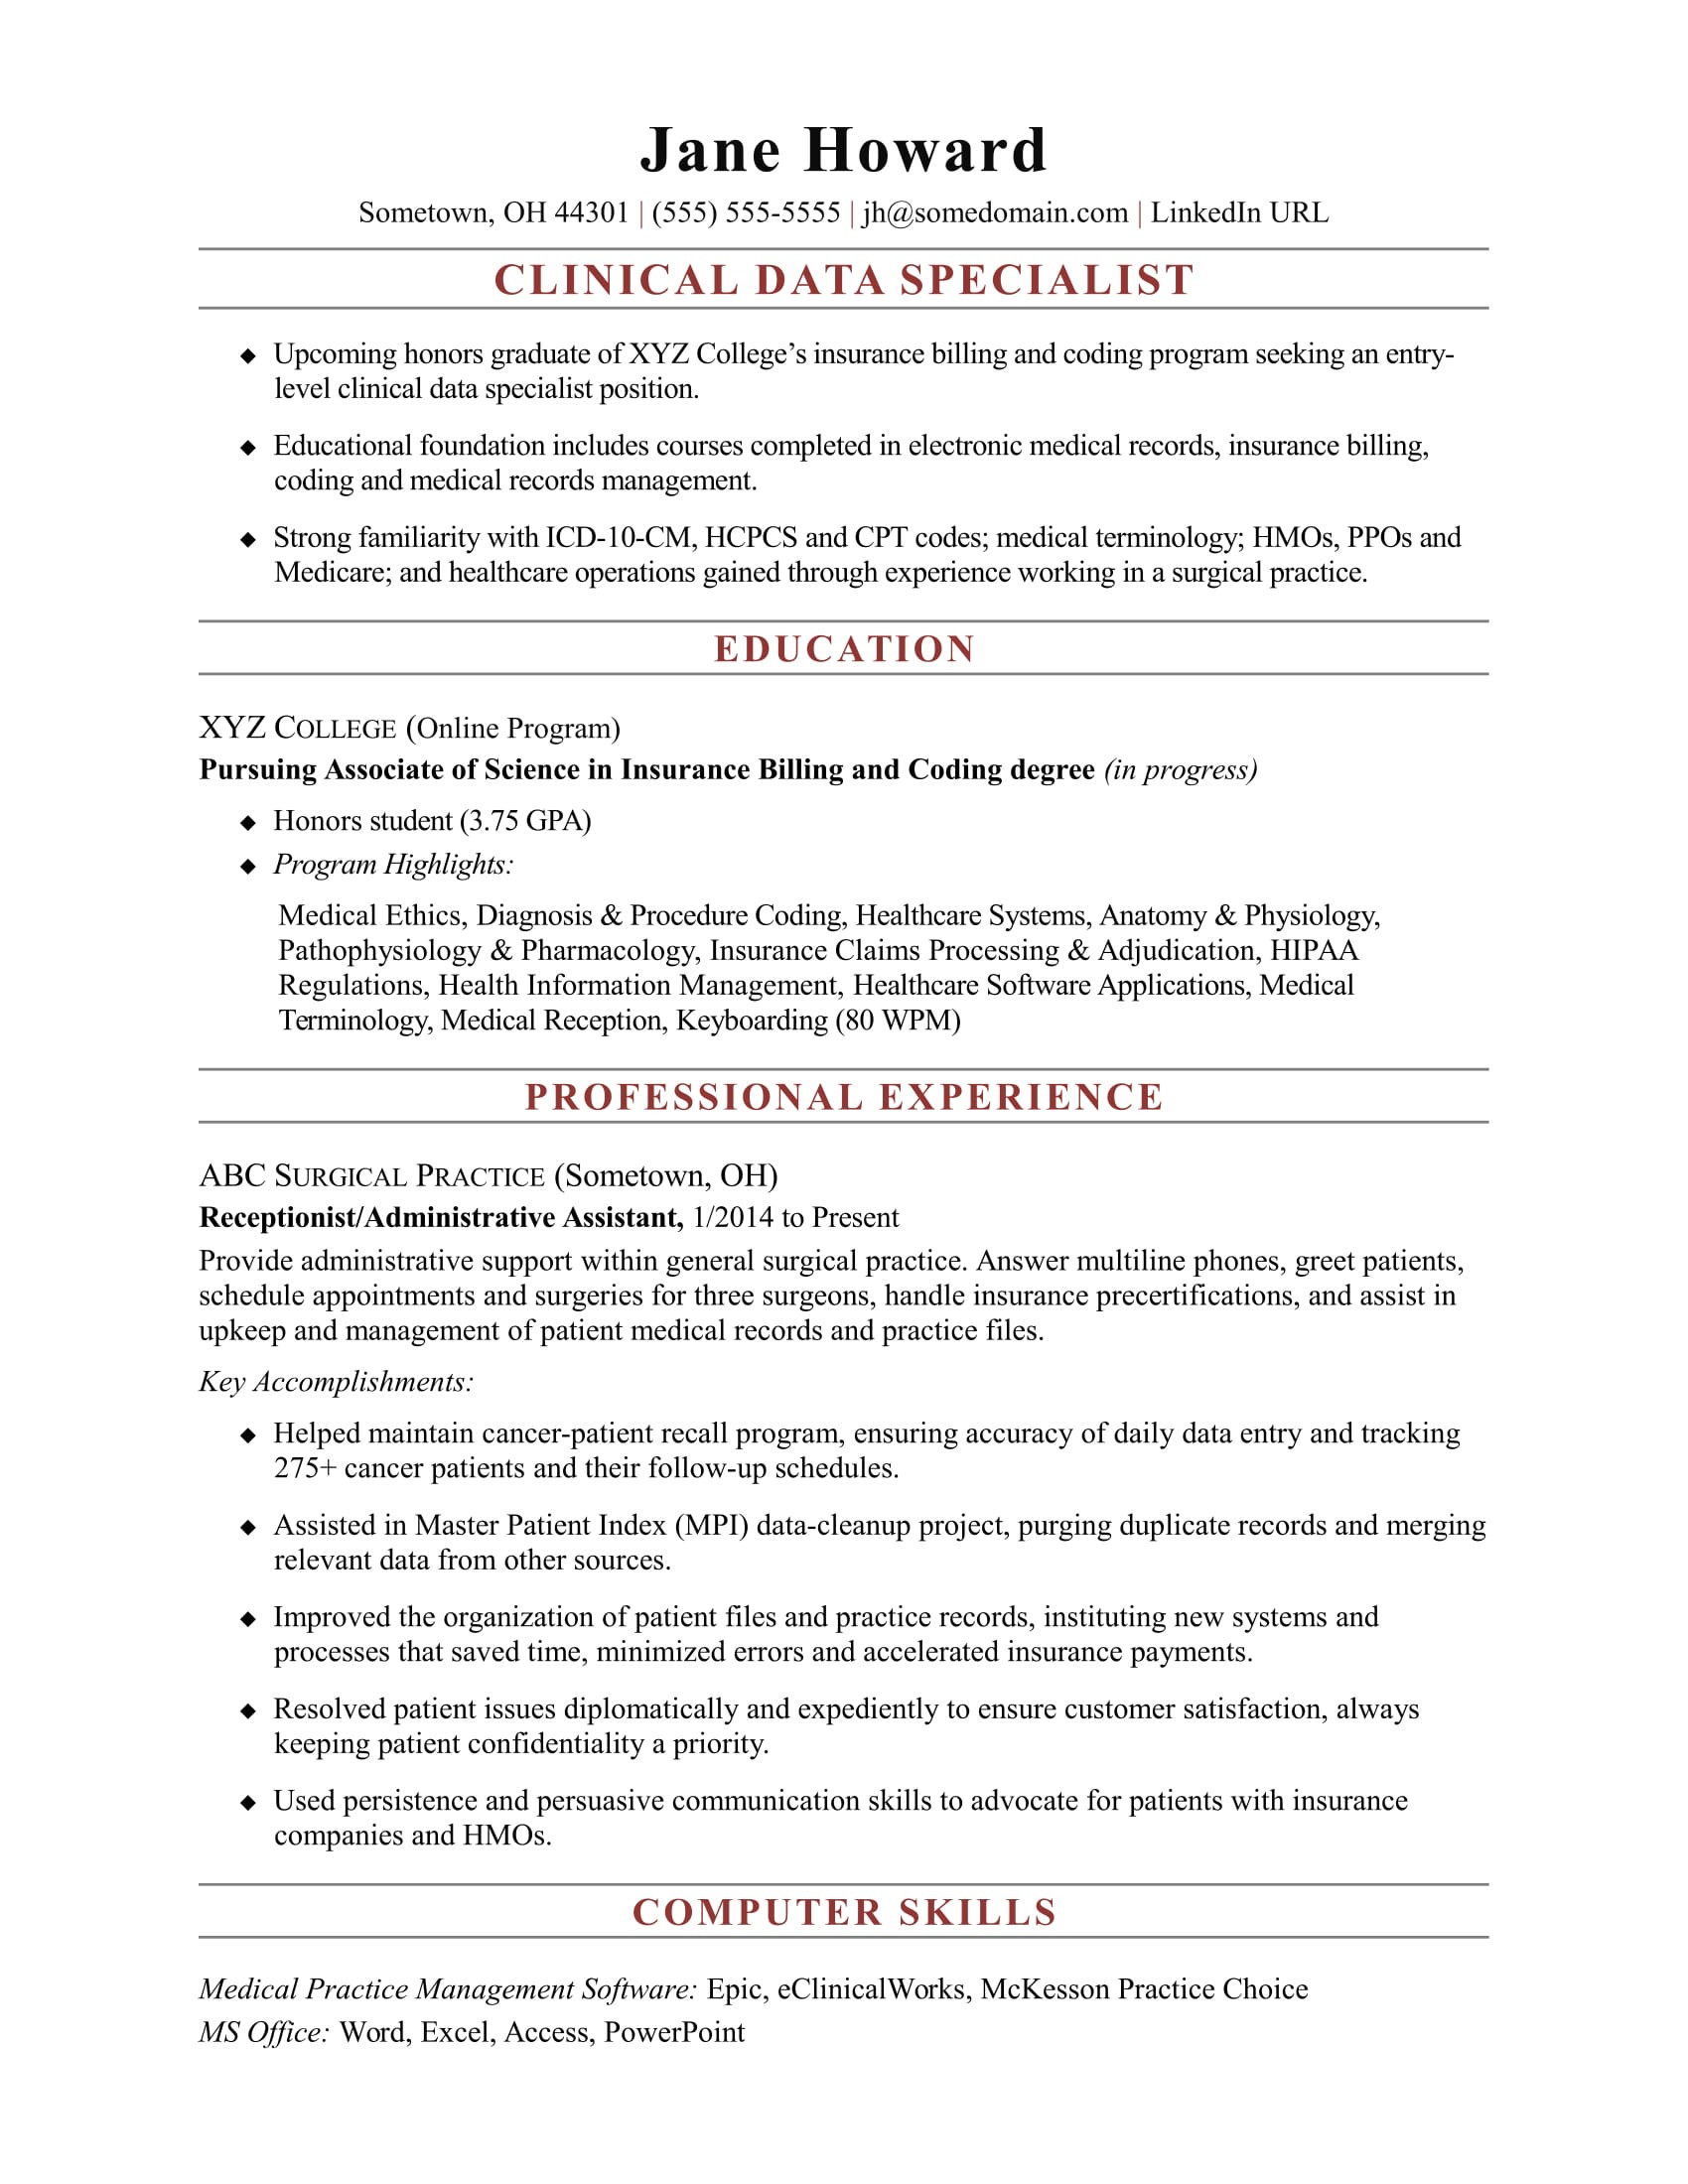 Masters Freshers Entry Level Resume Sample Entry-level Clinical Data Specialist Resume Sample Monster.com